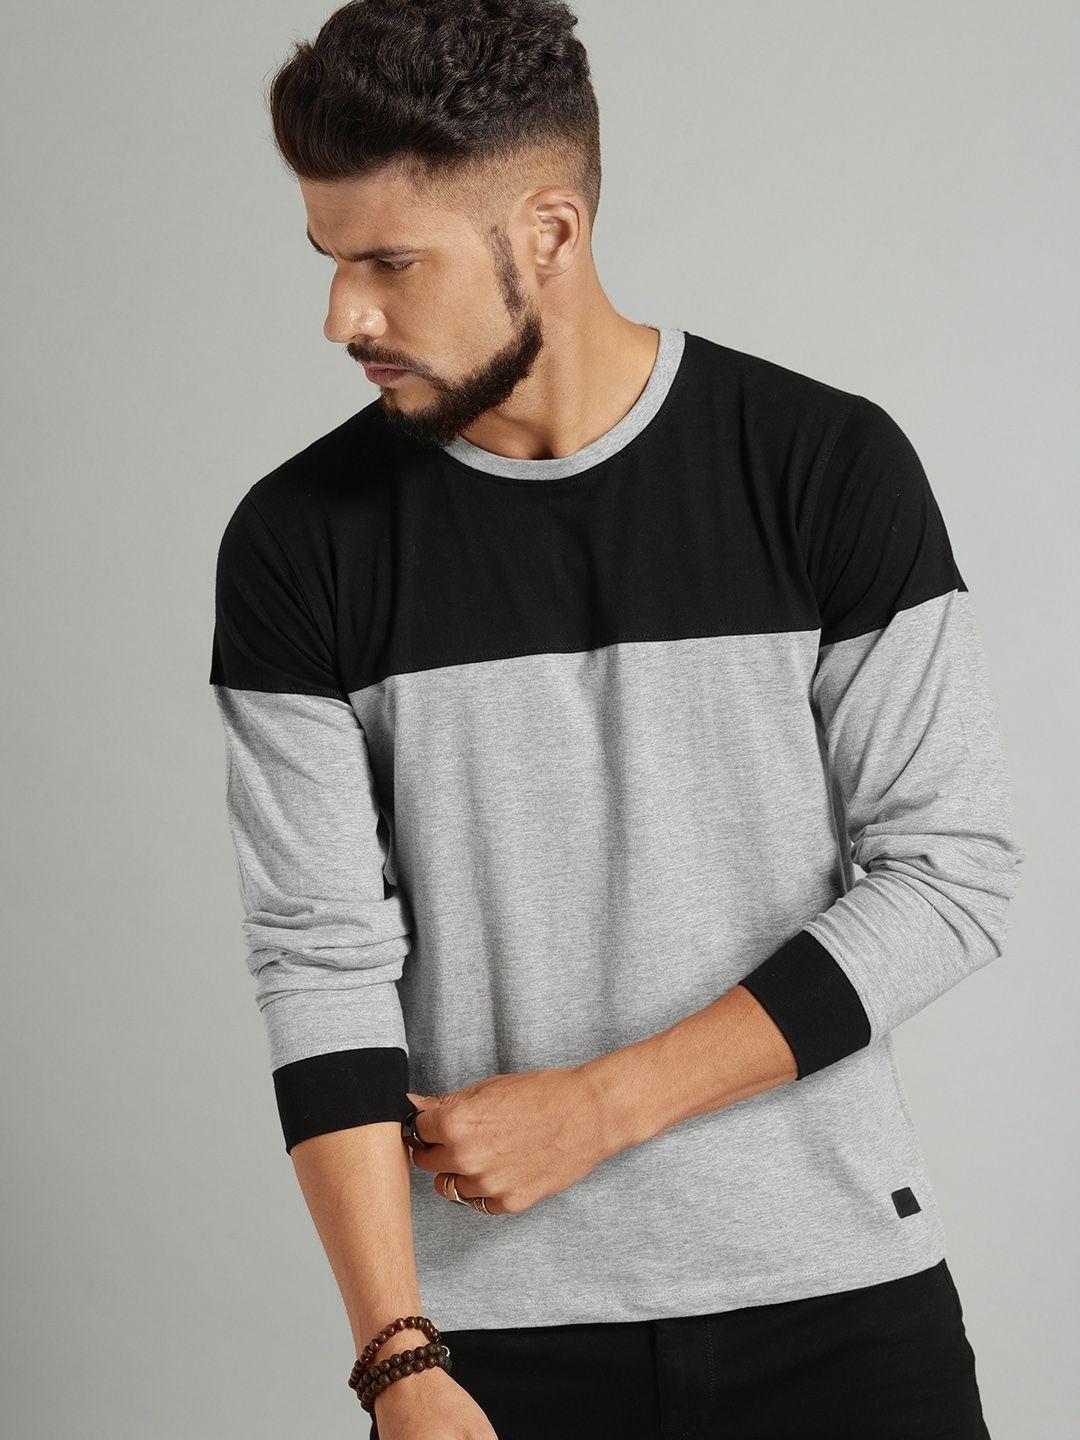 roadster-men-grey-melange-&-black-colourblocked-t-shirt